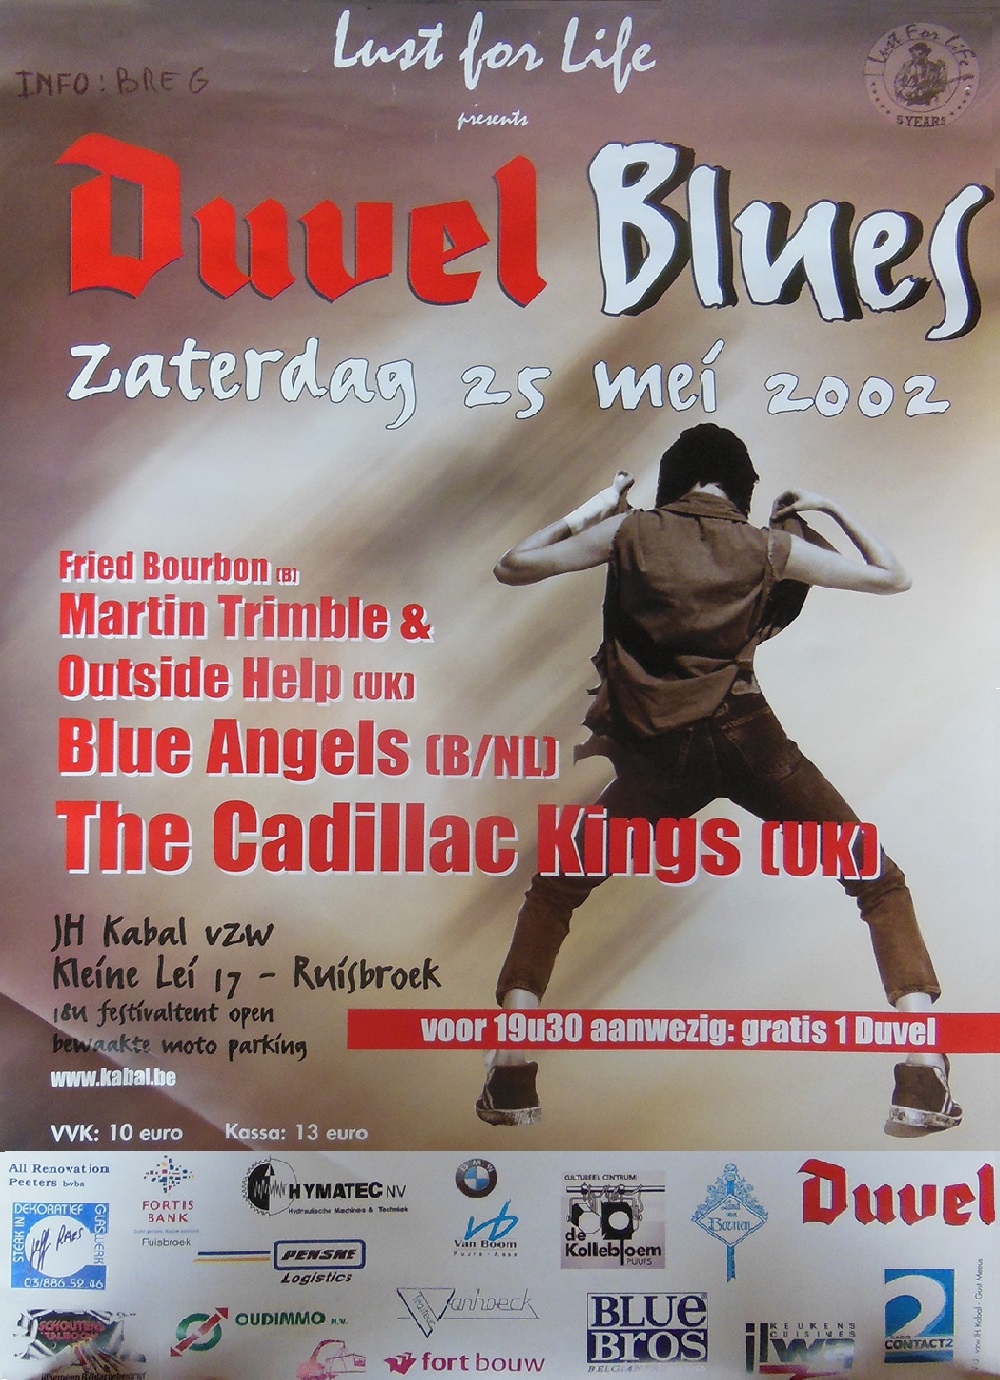 Duvelblues, 2002